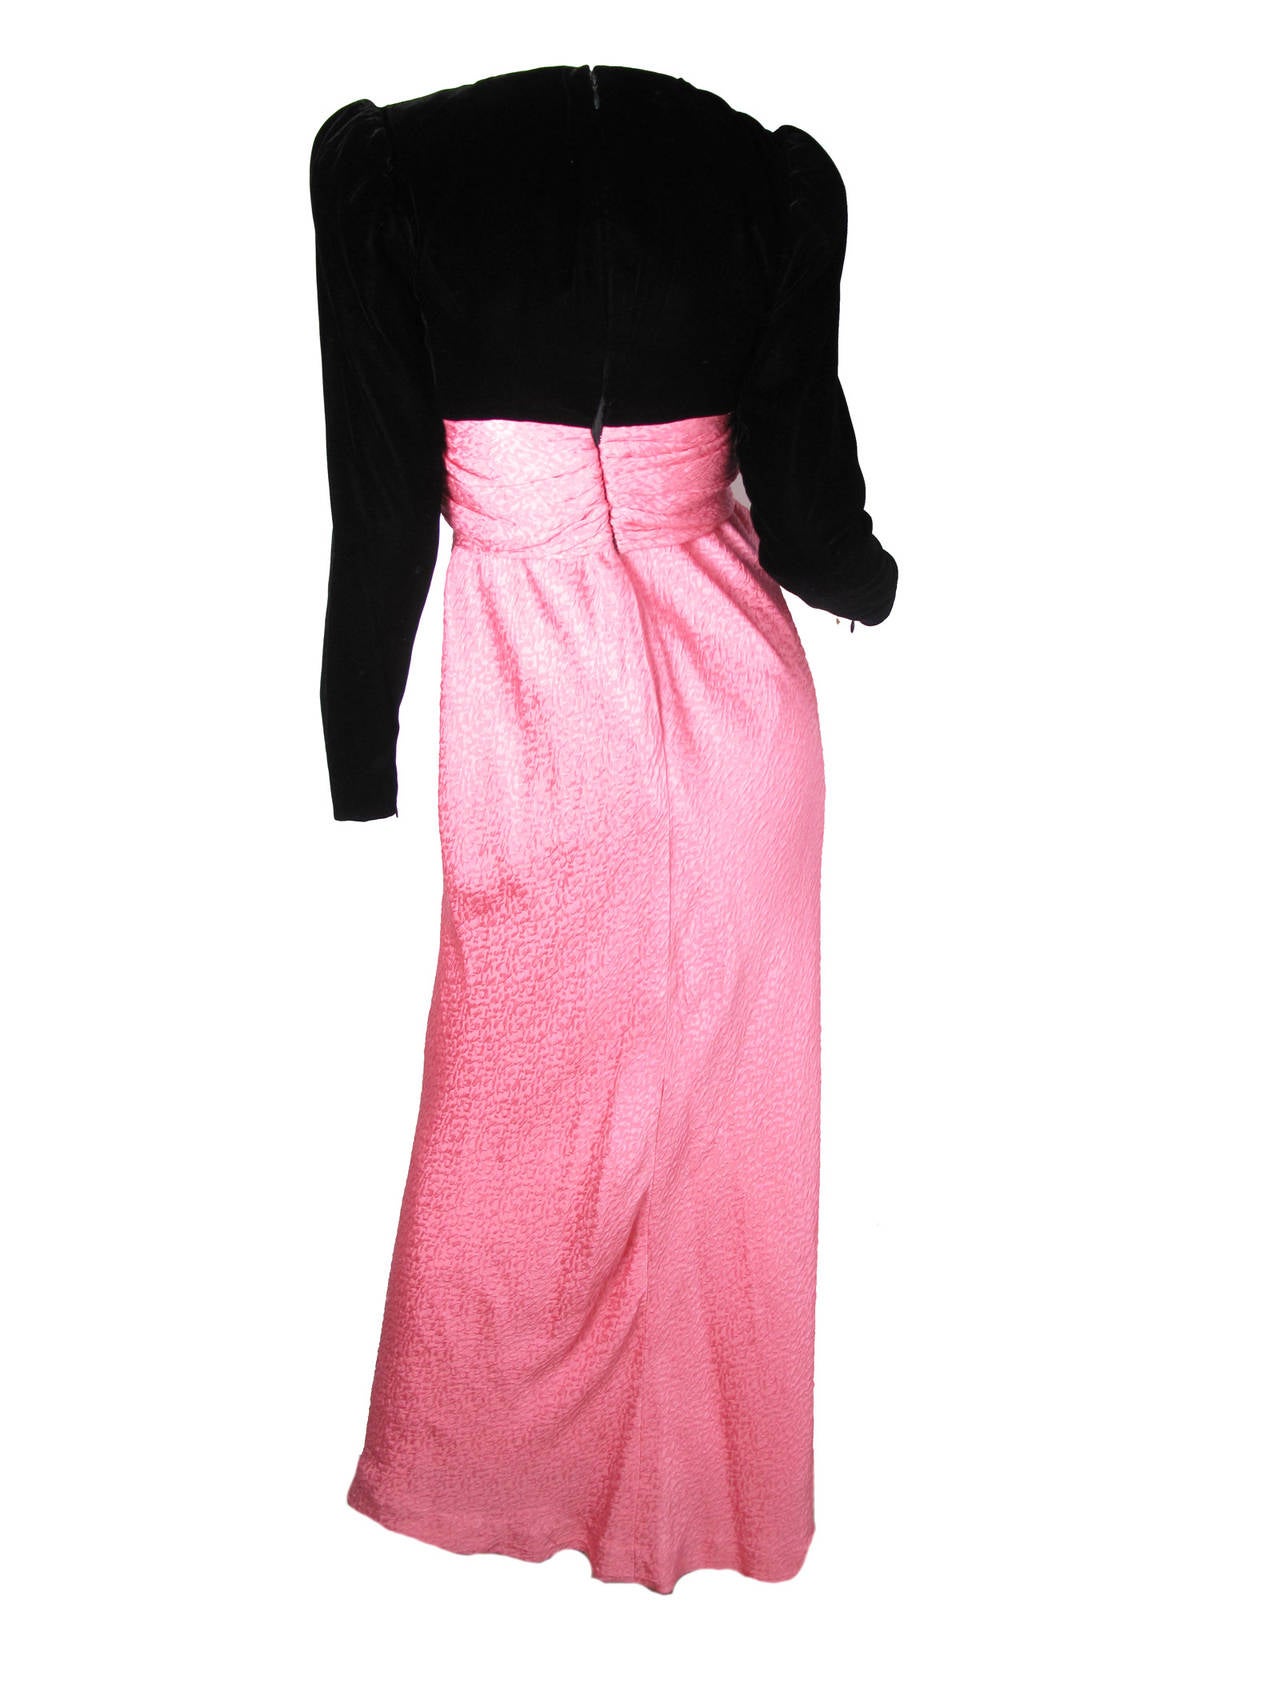 Oscar de la Renta pink gown with black velvet.  Condition: Very good.  Size 4 

34